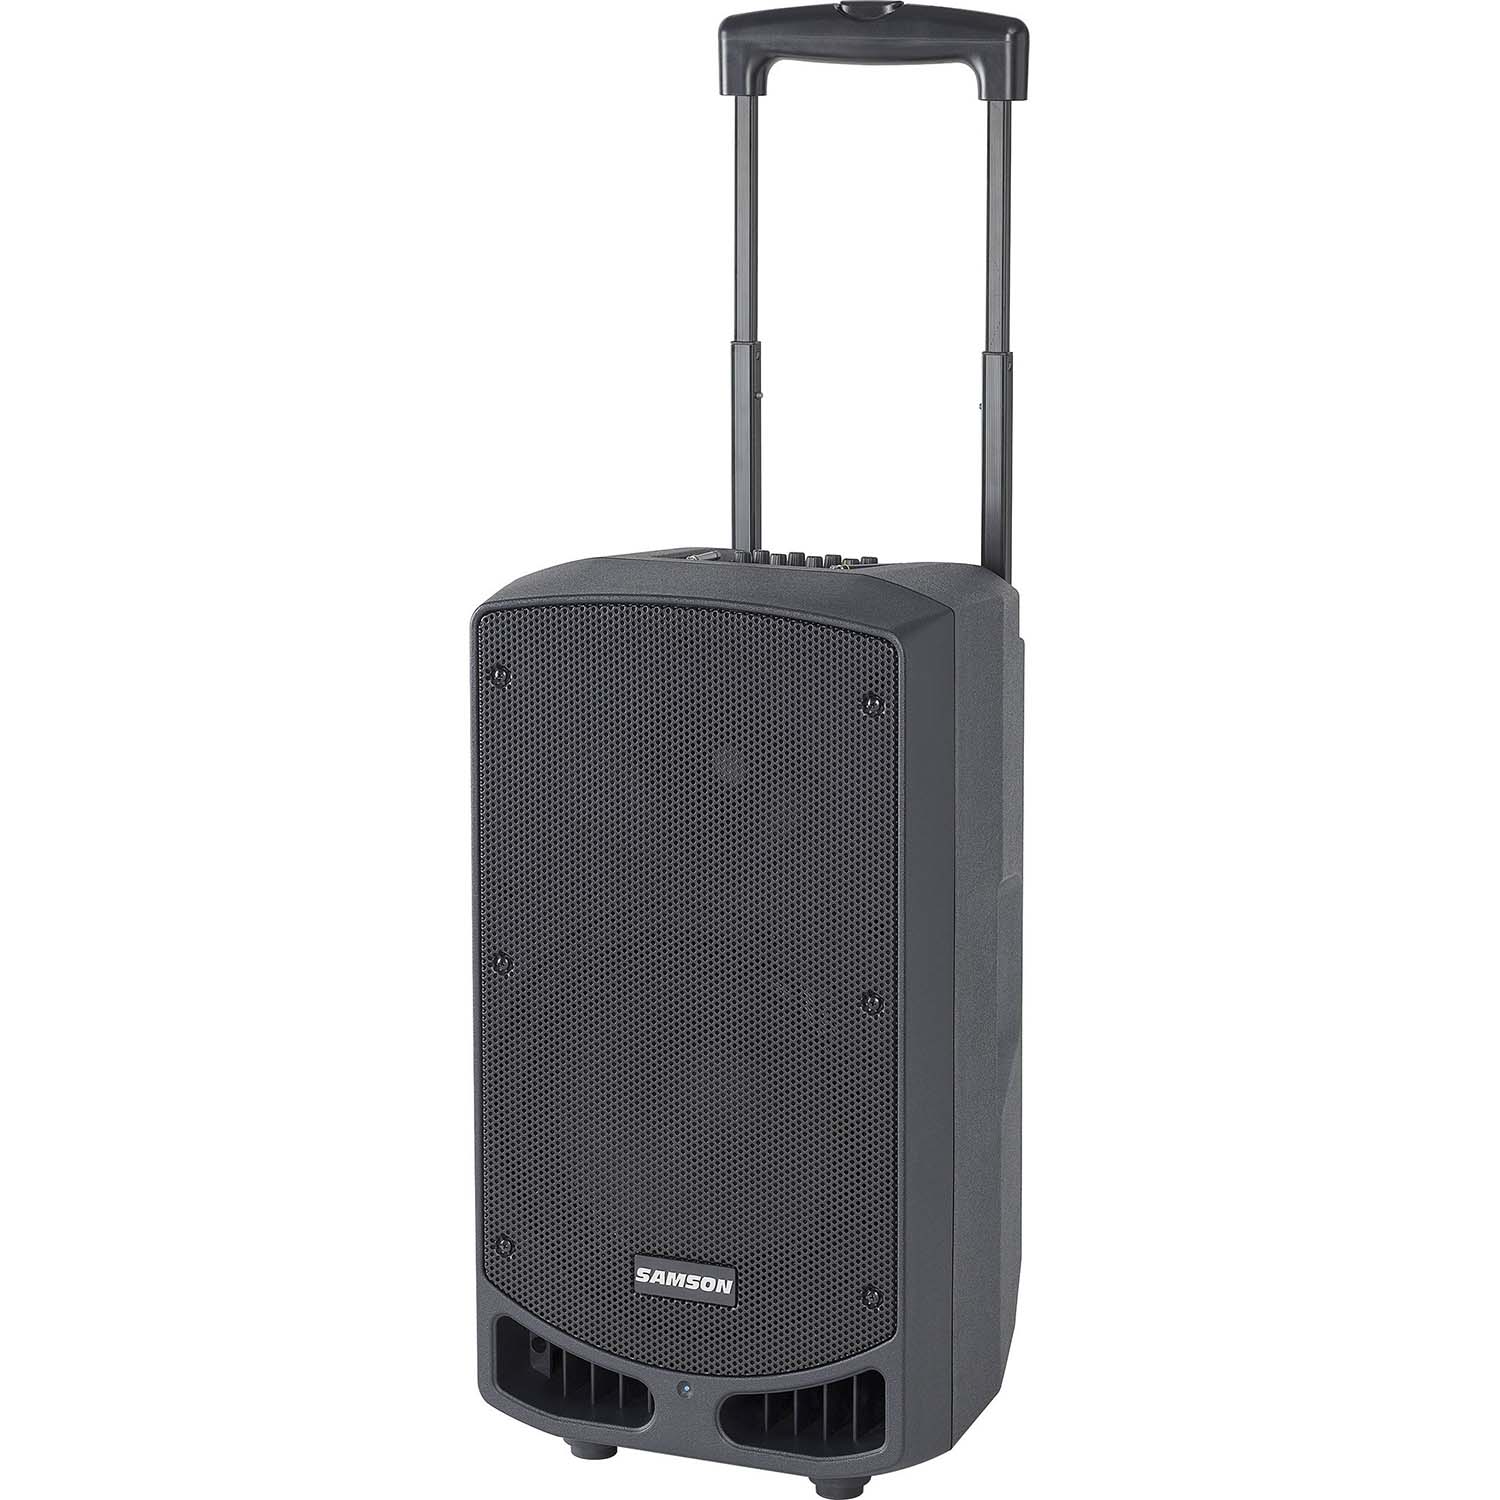 Samson SAXP310W-K Portable PA System with Wireless Microphone - K: 470 to 494 MHz - Hollywood DJ